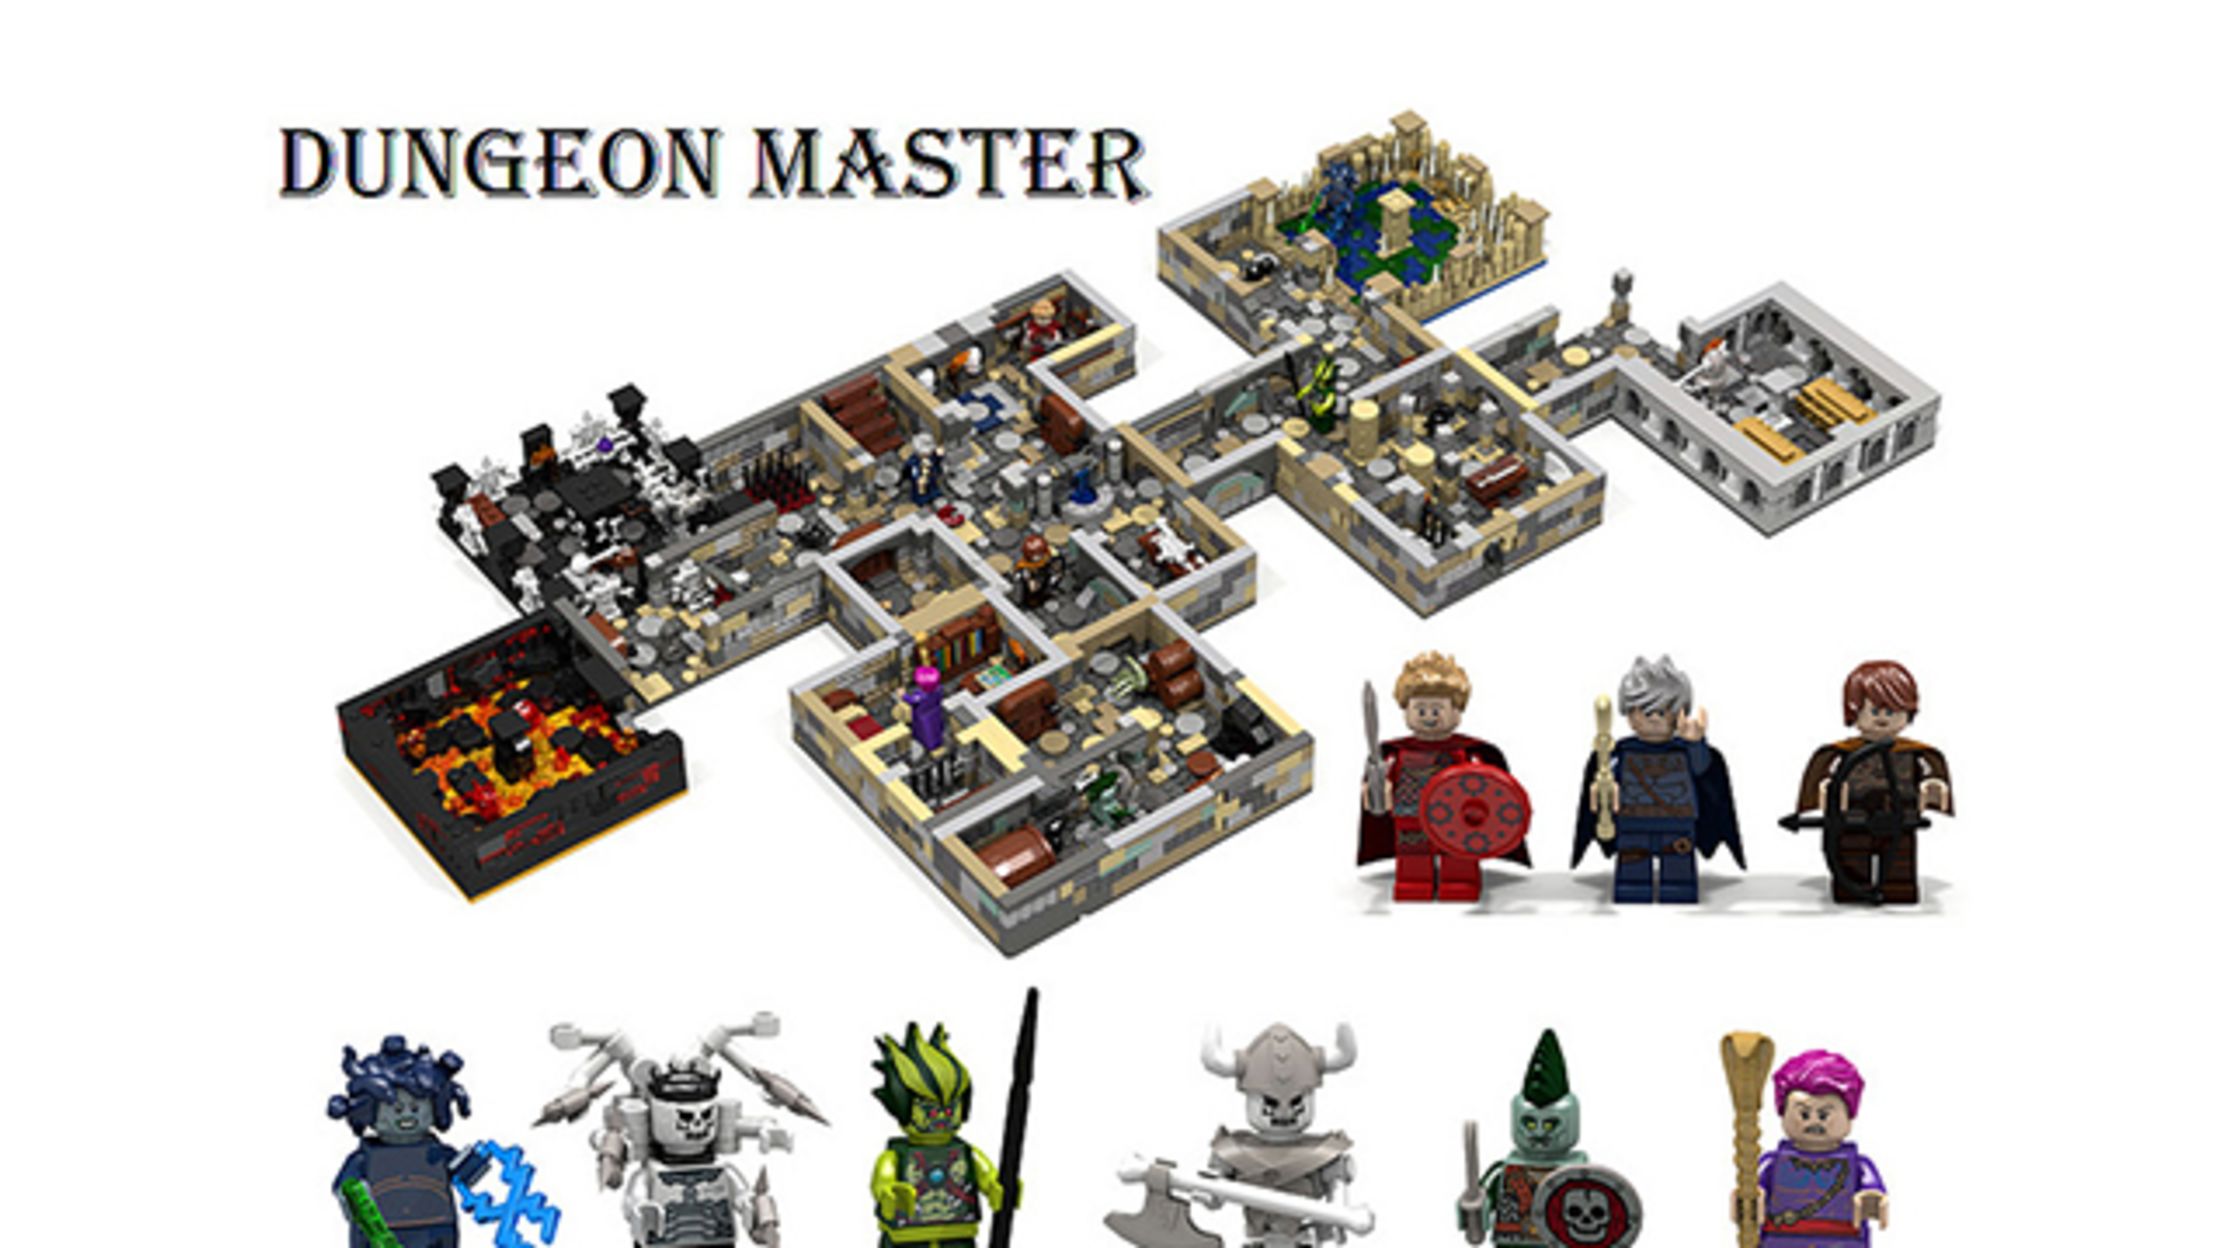 Dungeons \u0026 Dragons-Inspired LEGO Set 